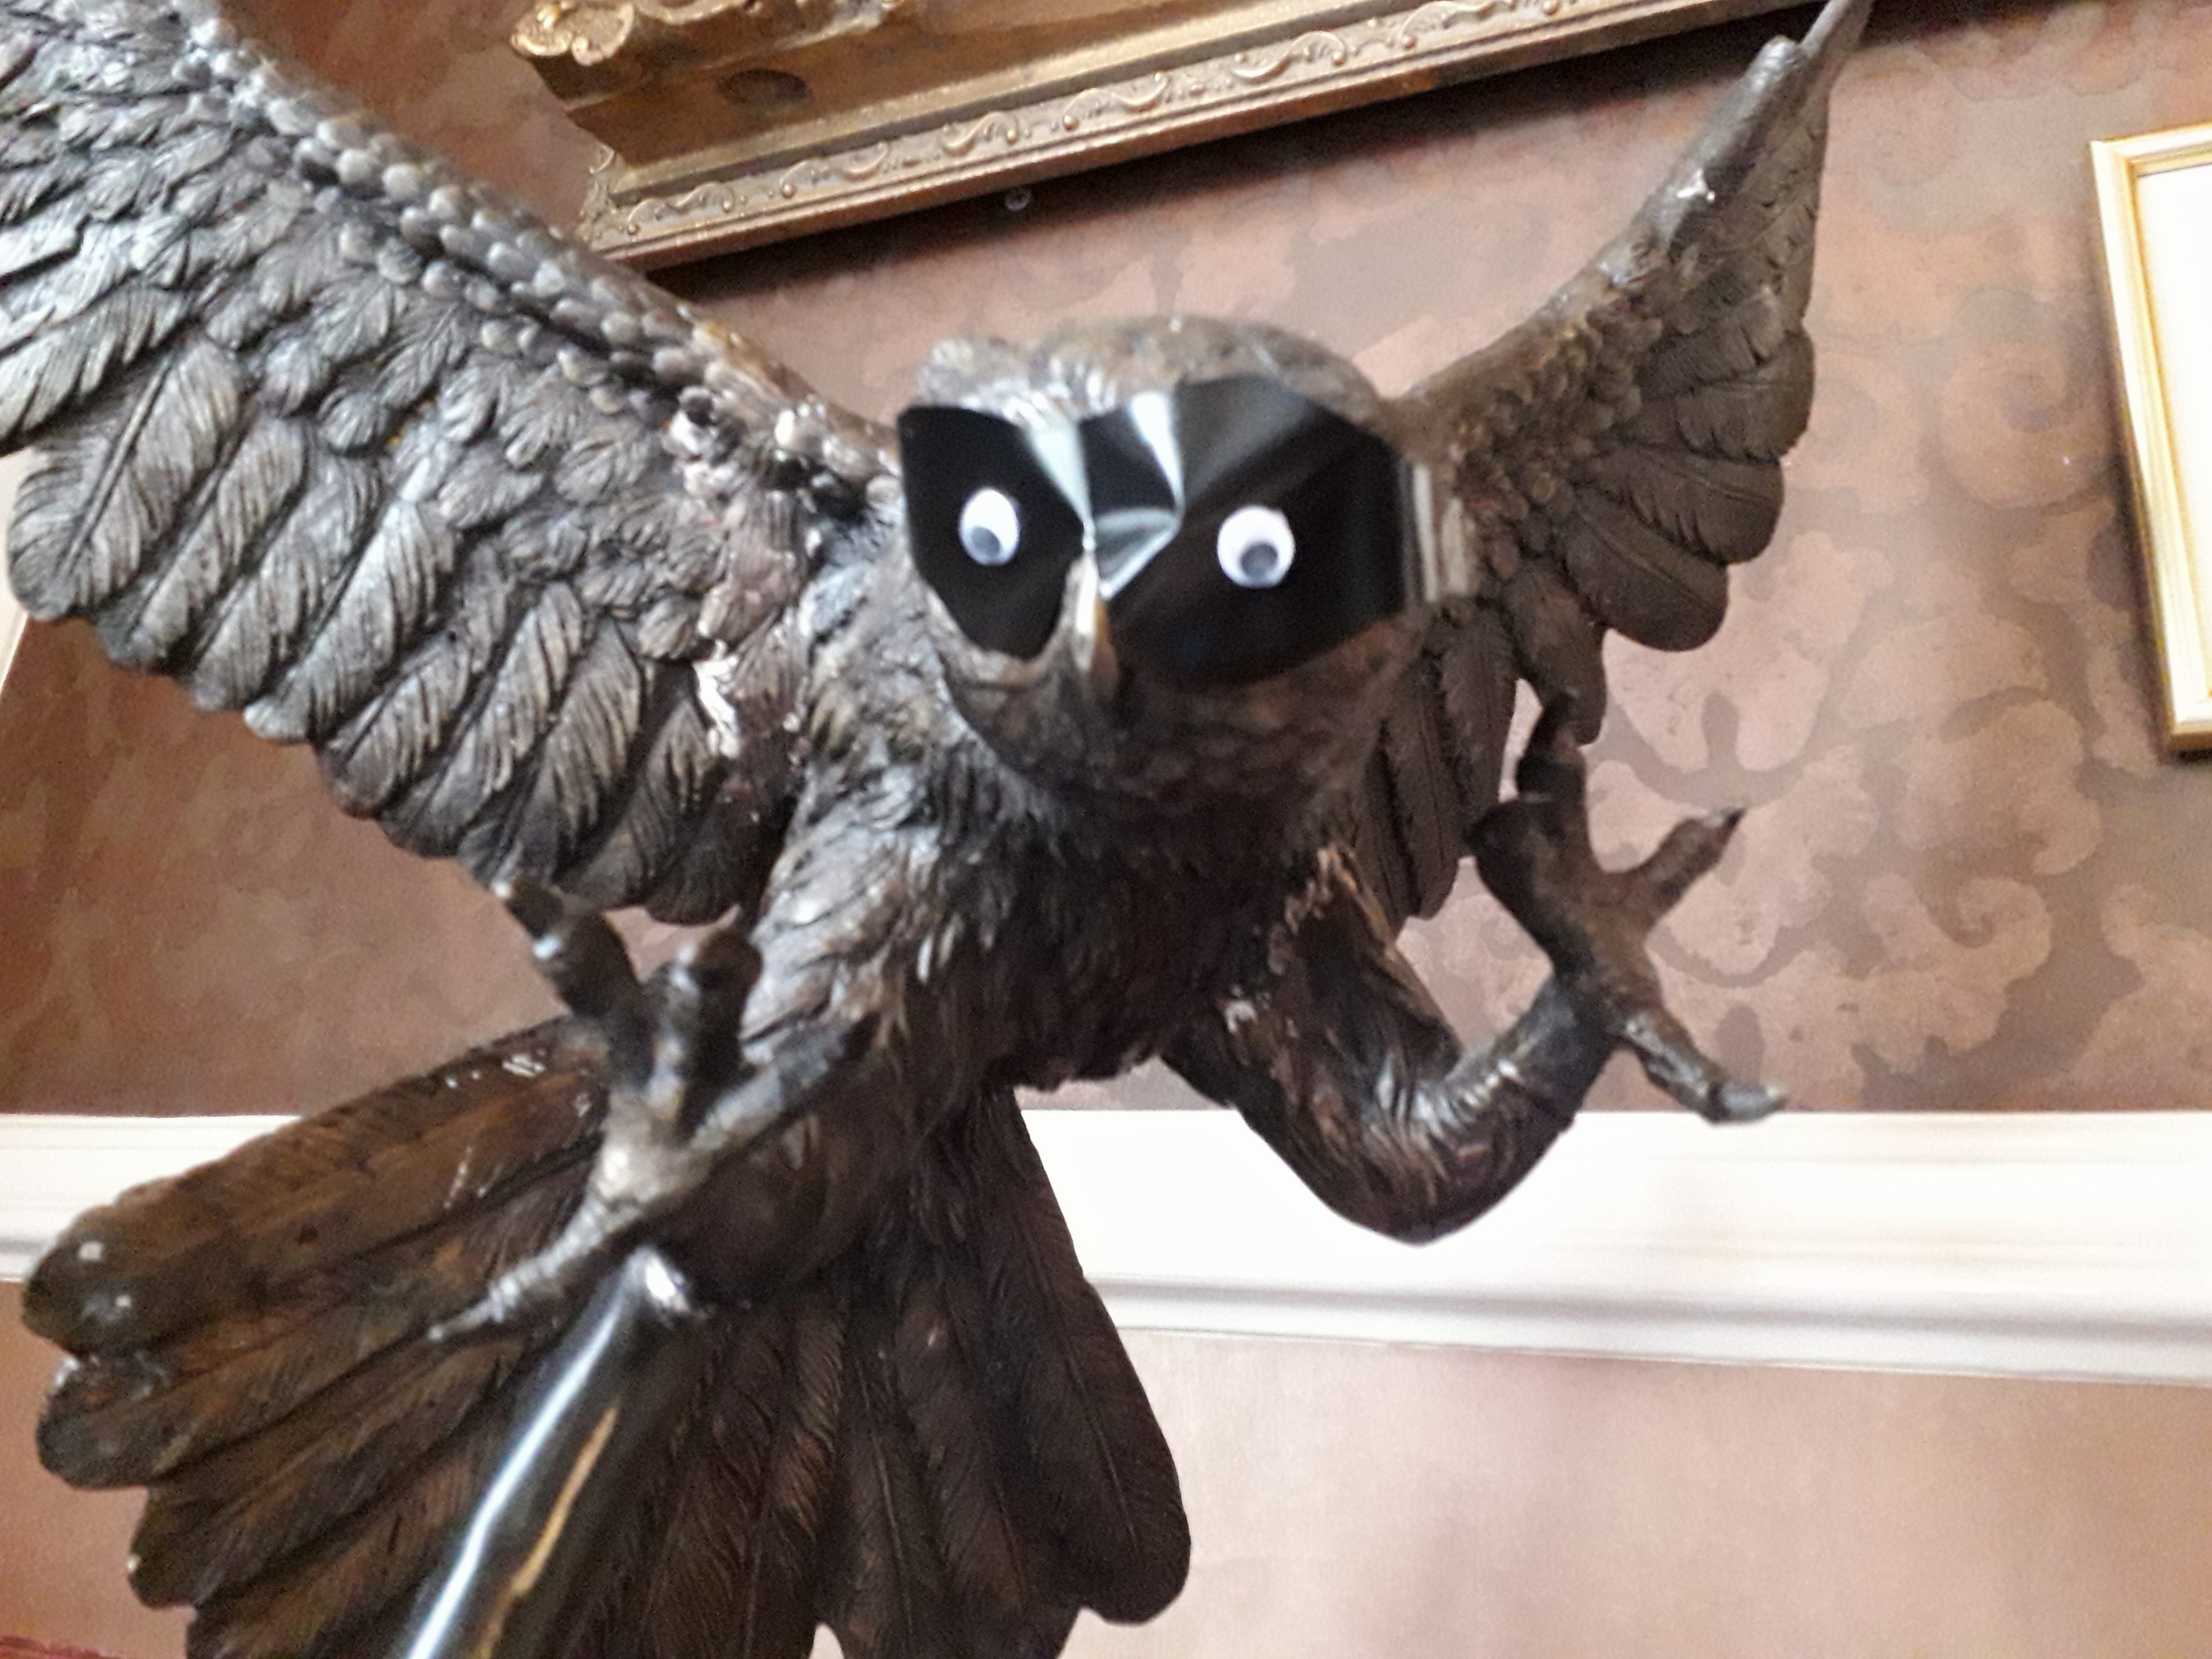 Owl sporting a Zorro mask